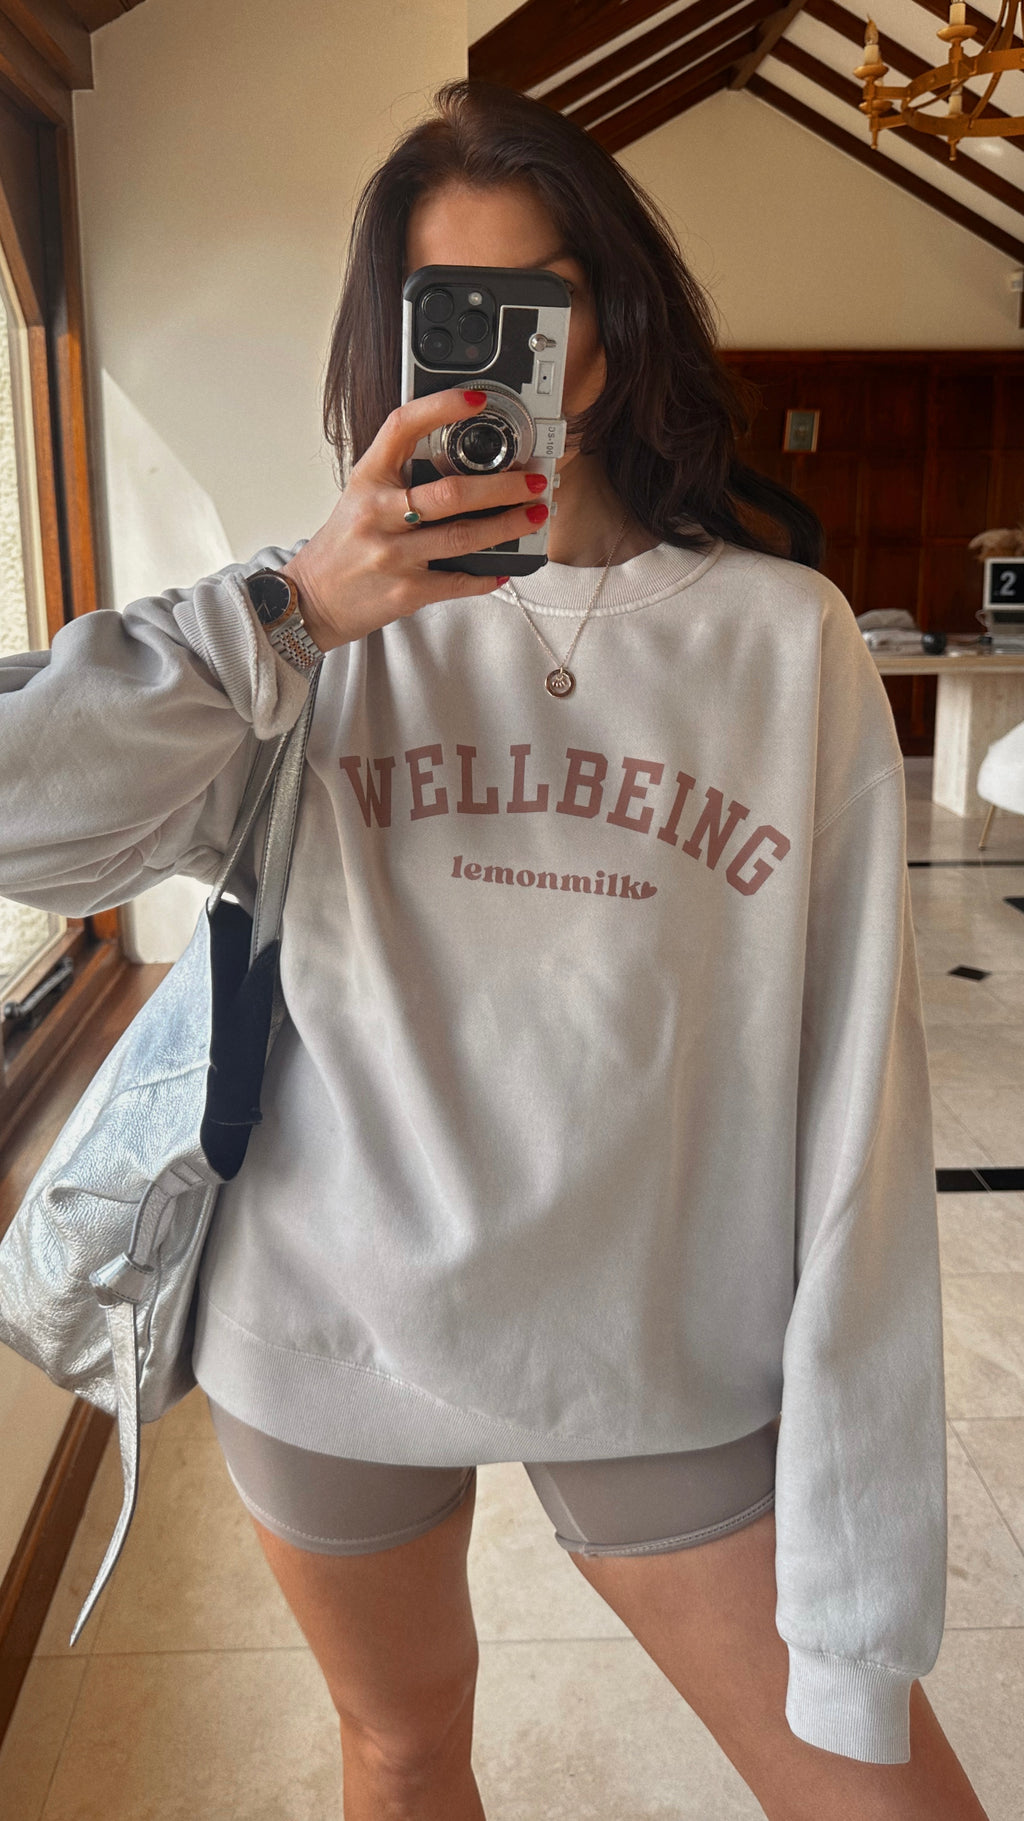 Wellbeing Sweatshirt in Caramel